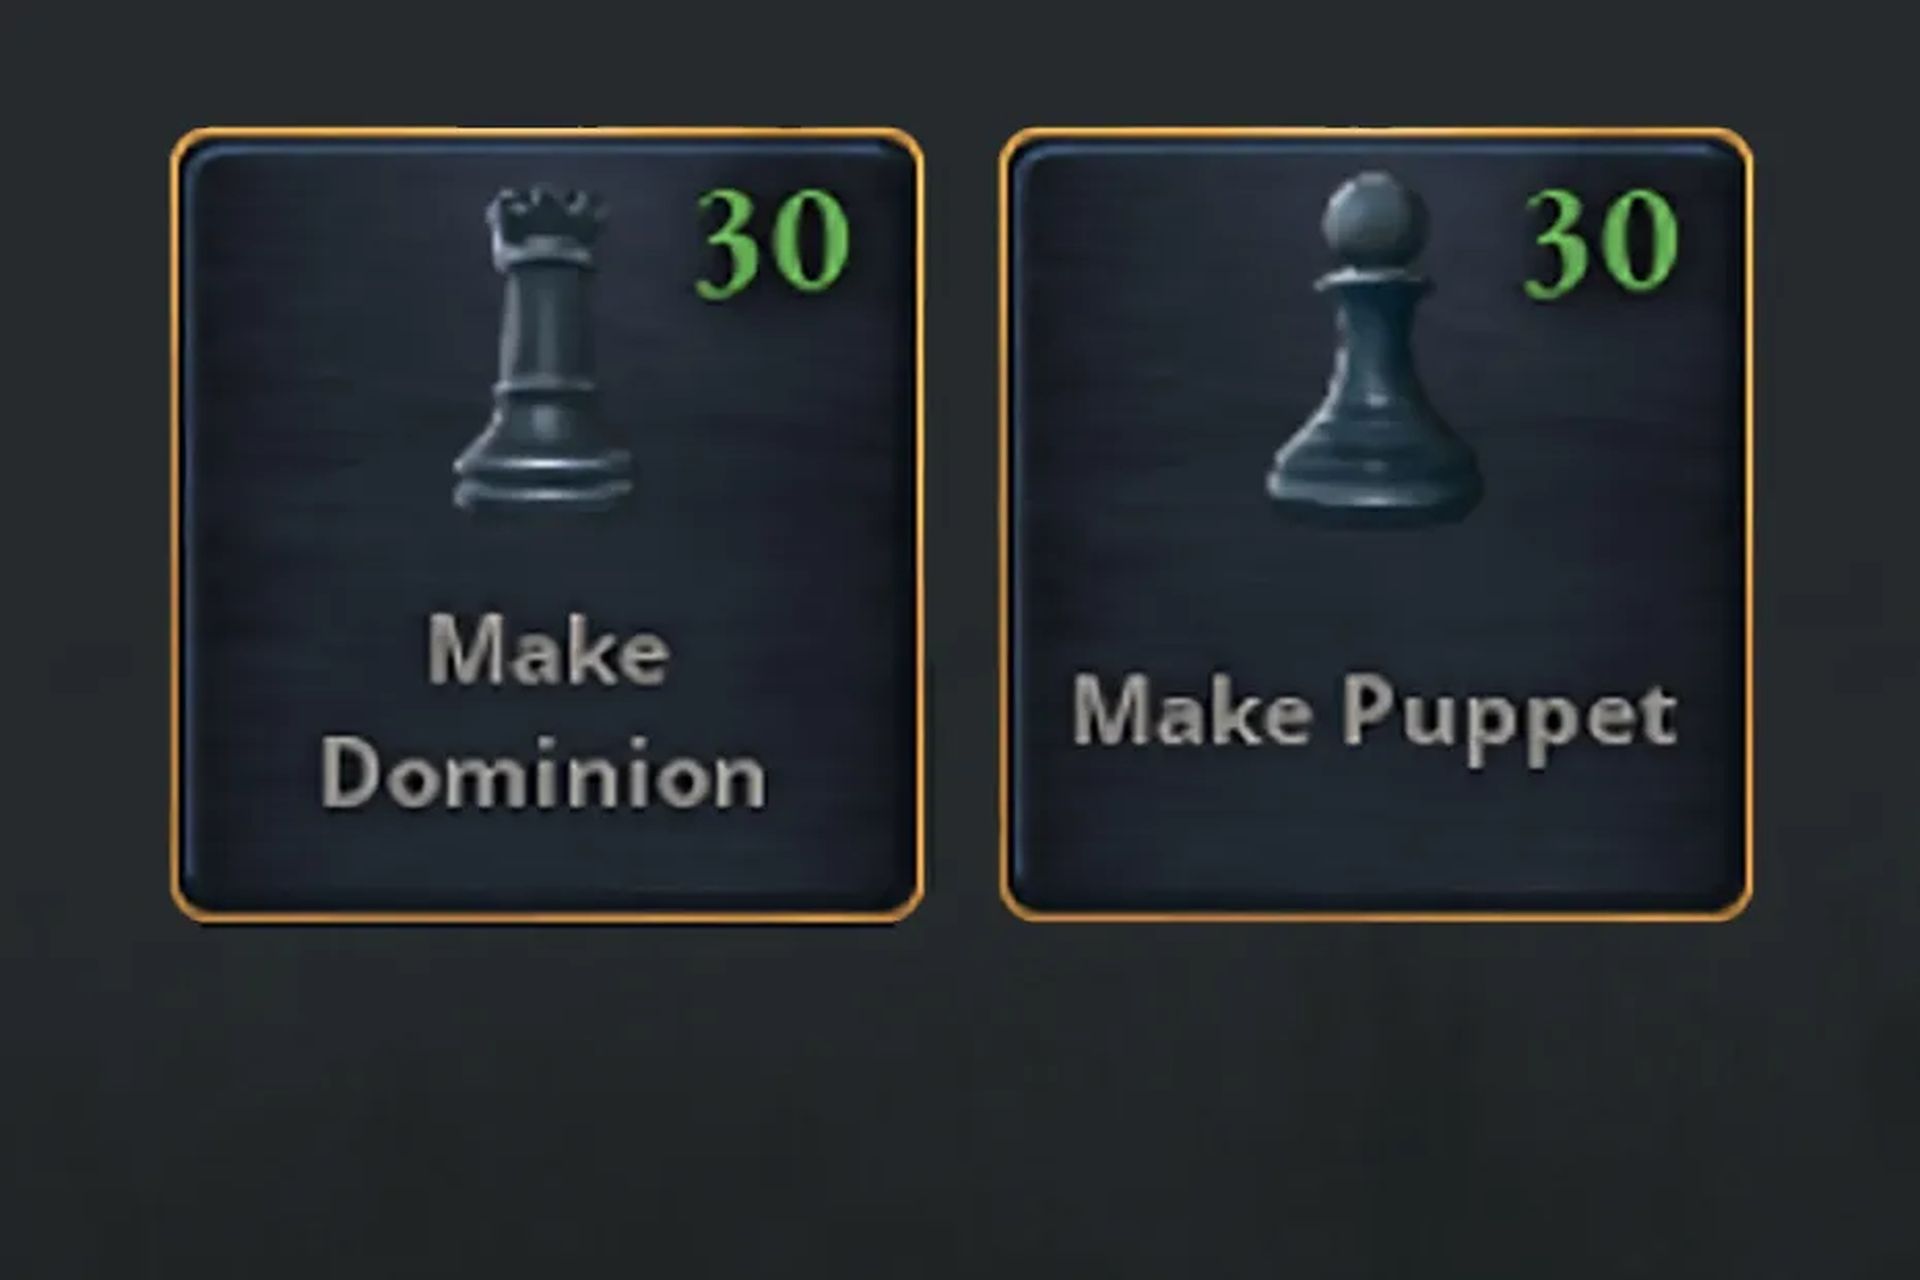 Asunto del anexo de Victoria 3: opciones ''Make Puppet'' y ''Make Dominion''